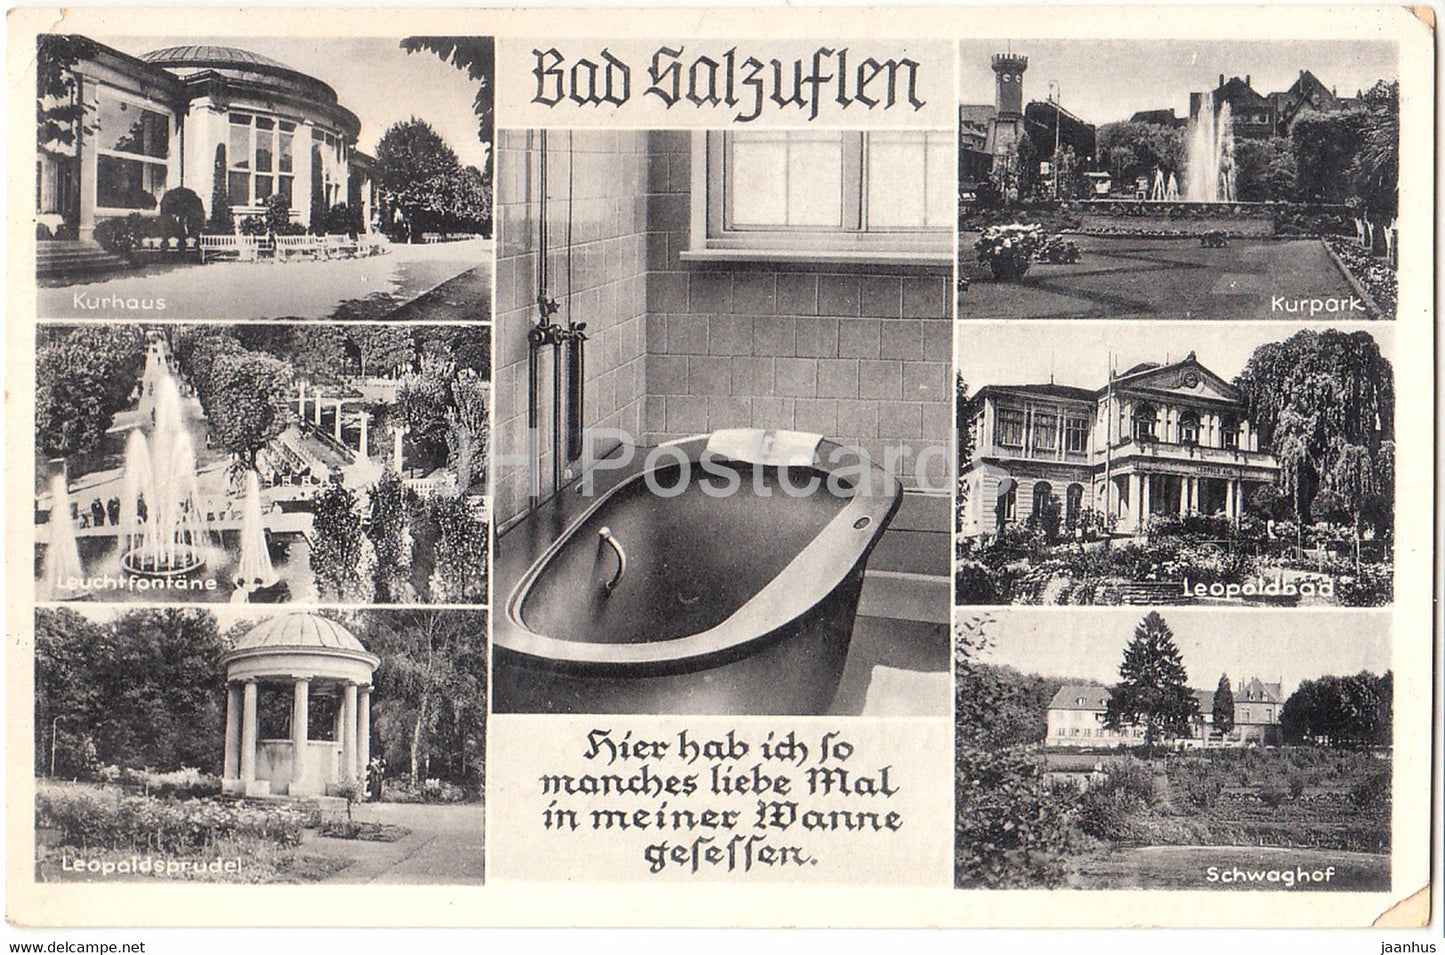 Bad Salzuflen - Kurhaus - Kurpark - Leuchtfontane - Leopoldsprudel - Schwaghow - old postcard - 1958 - Germany - used - JH Postcards